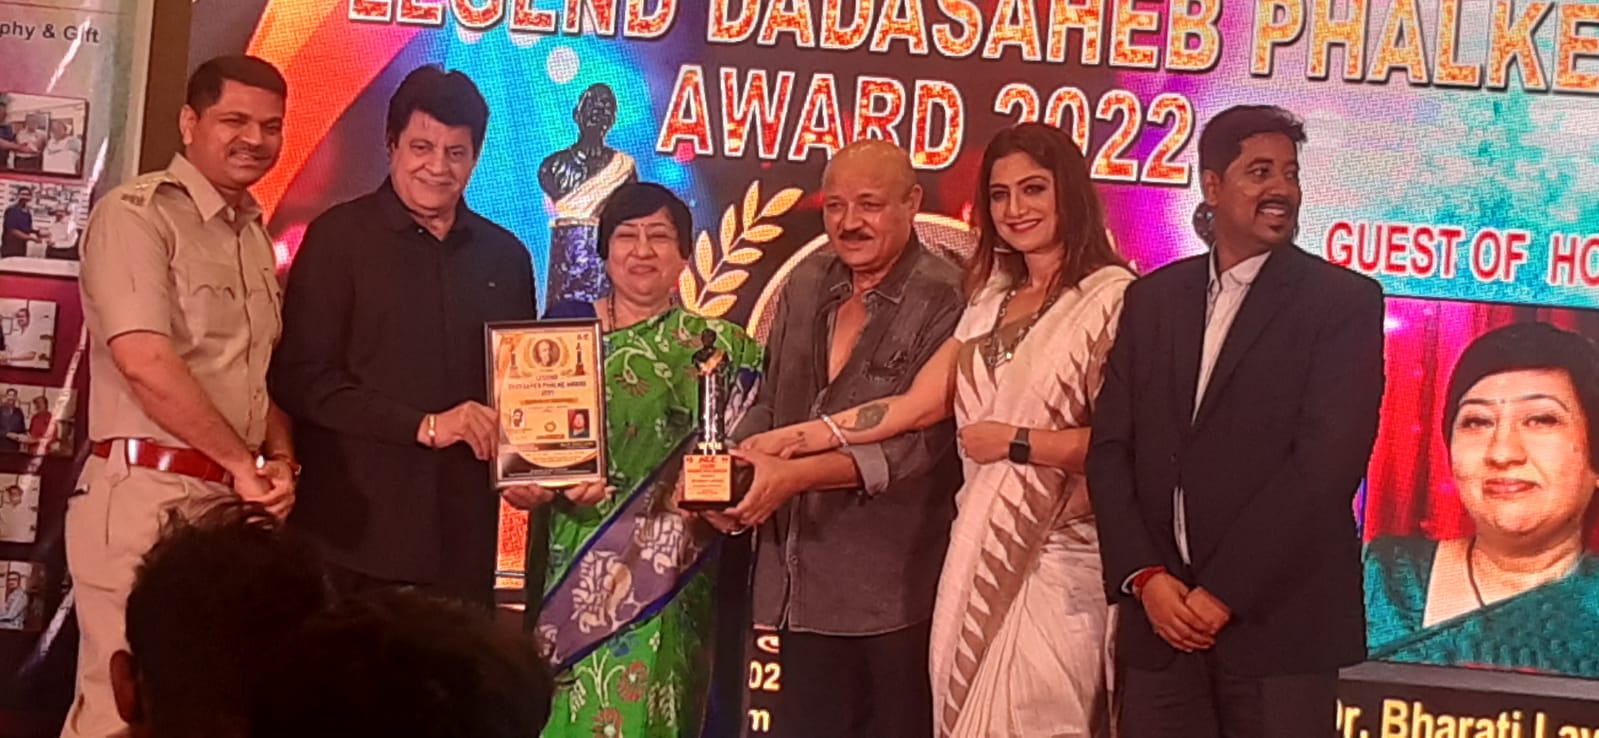 Senior film journalist Kali Das Pandey received the Legend Dadasaheb Phalke Award